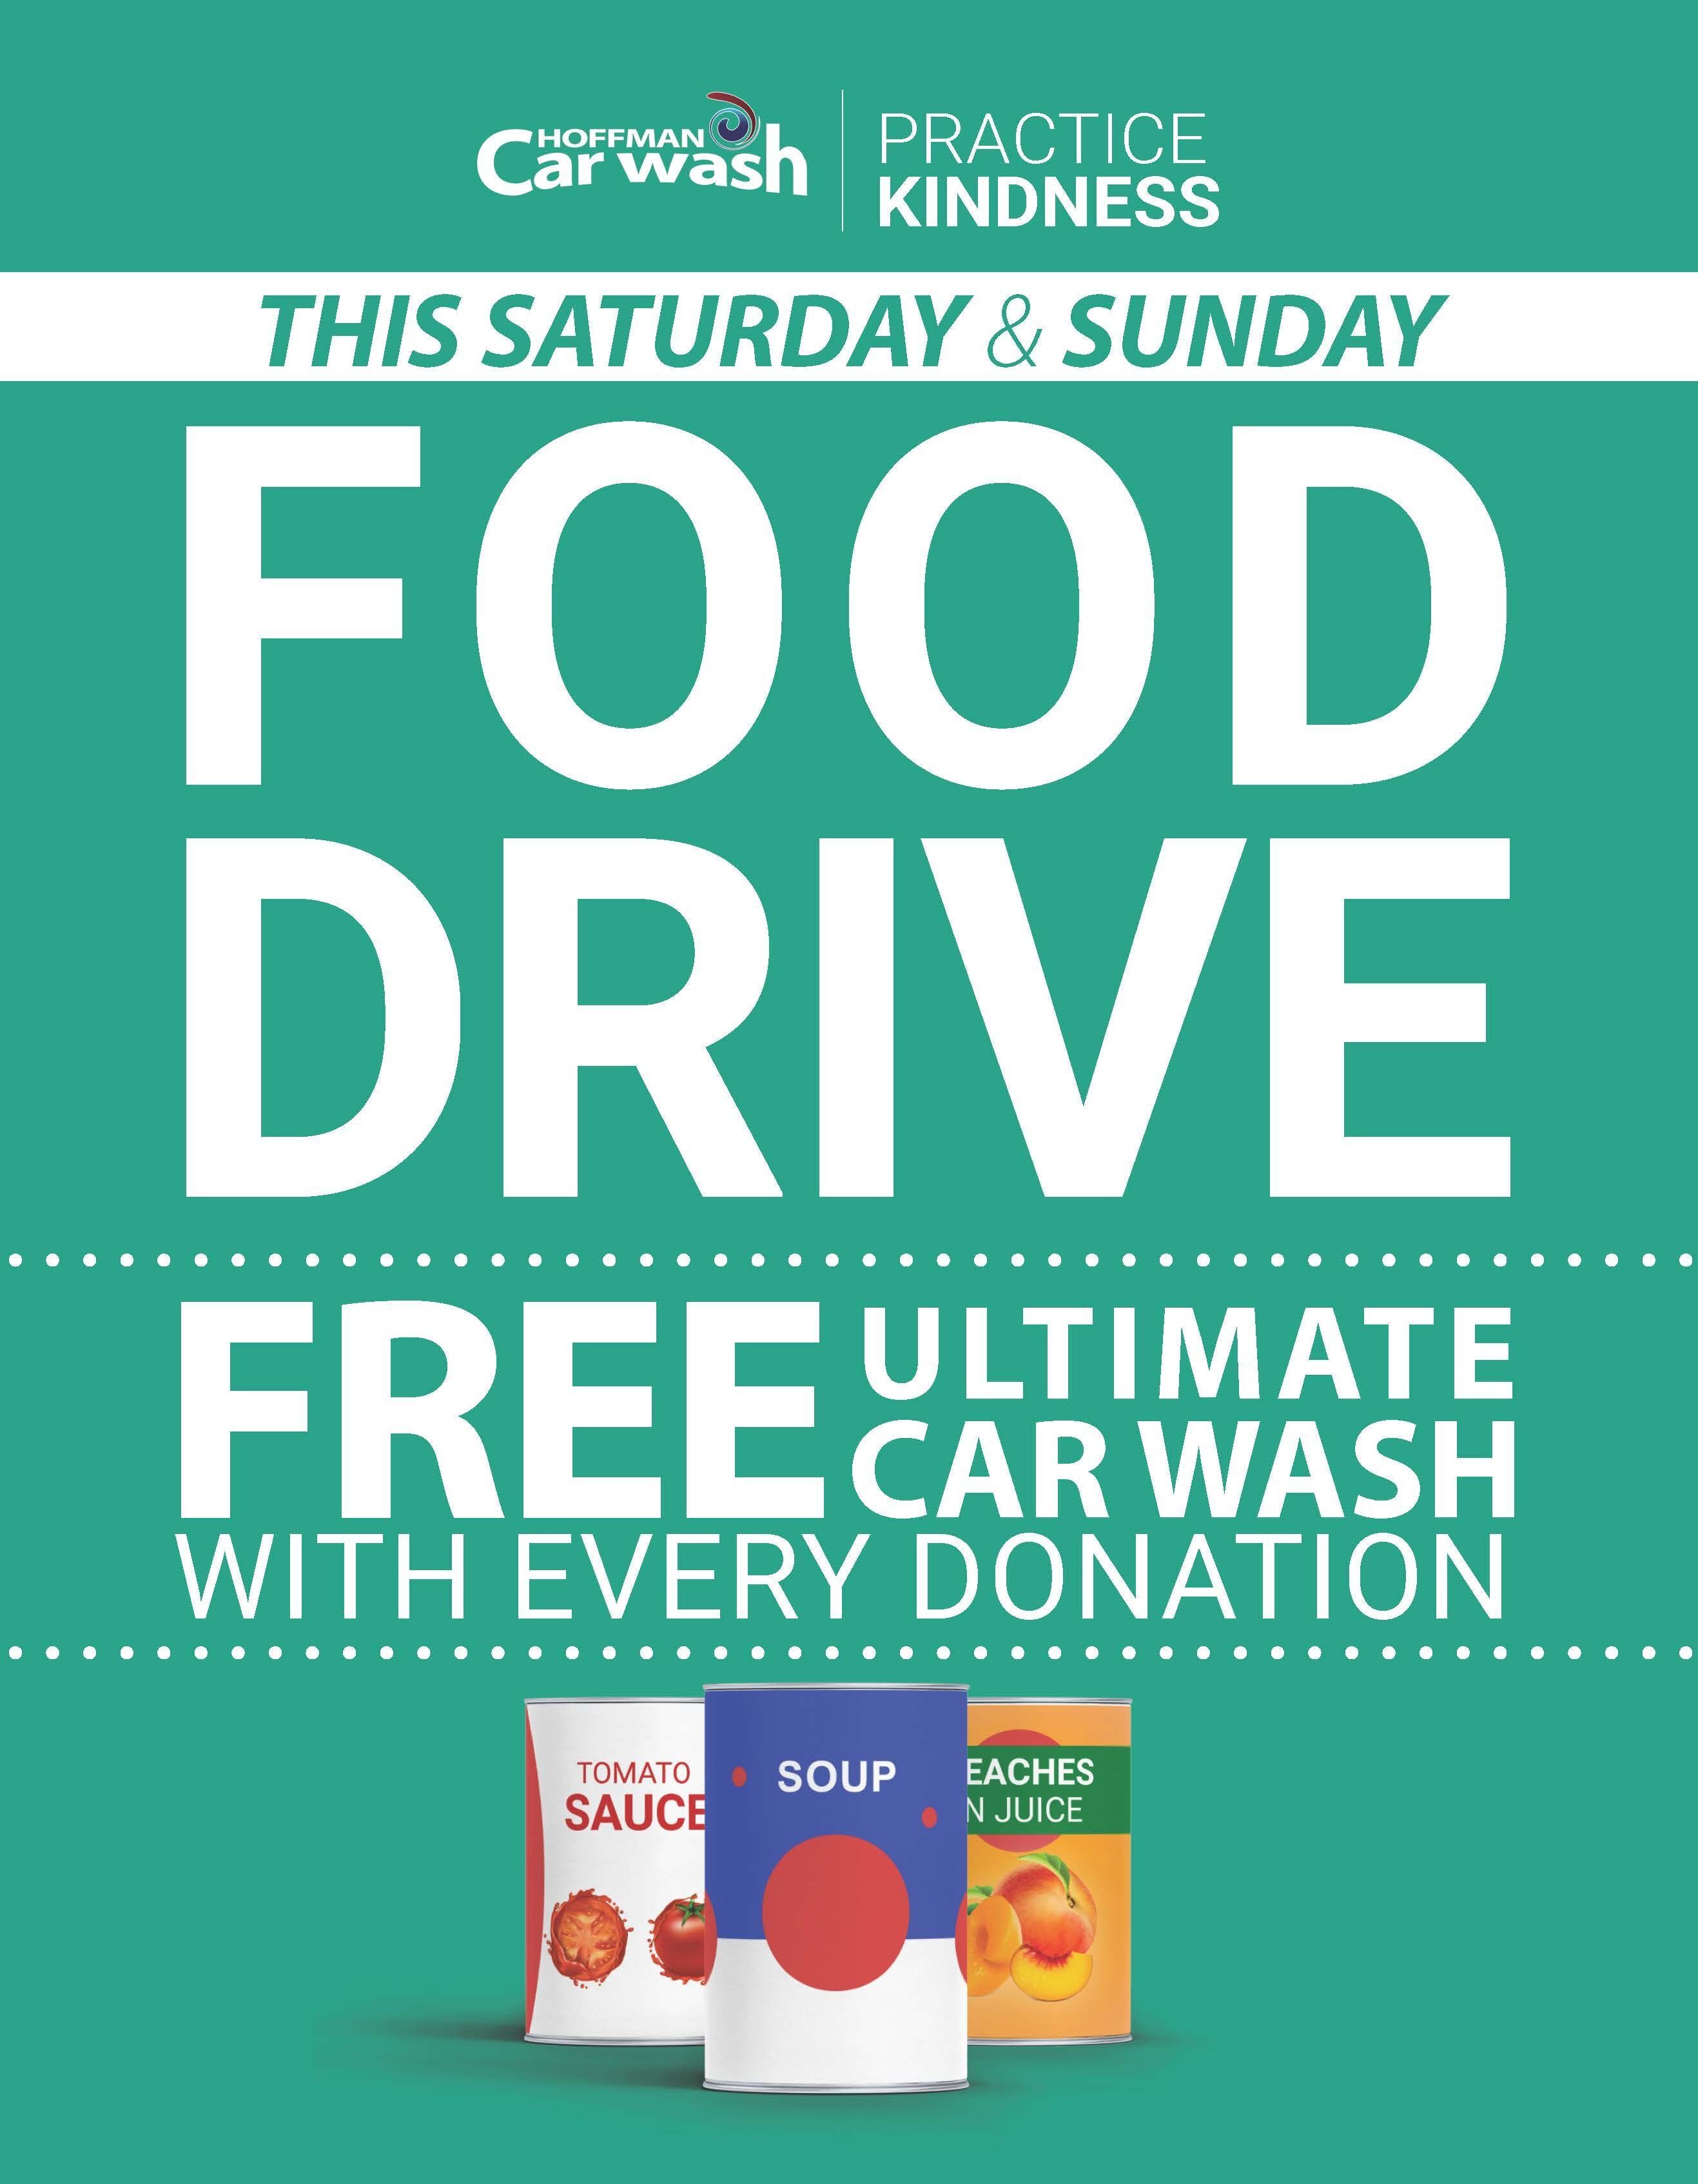 Donate Unexpired Nonperishable Food & Get a FREE Ultimate Car Wash!